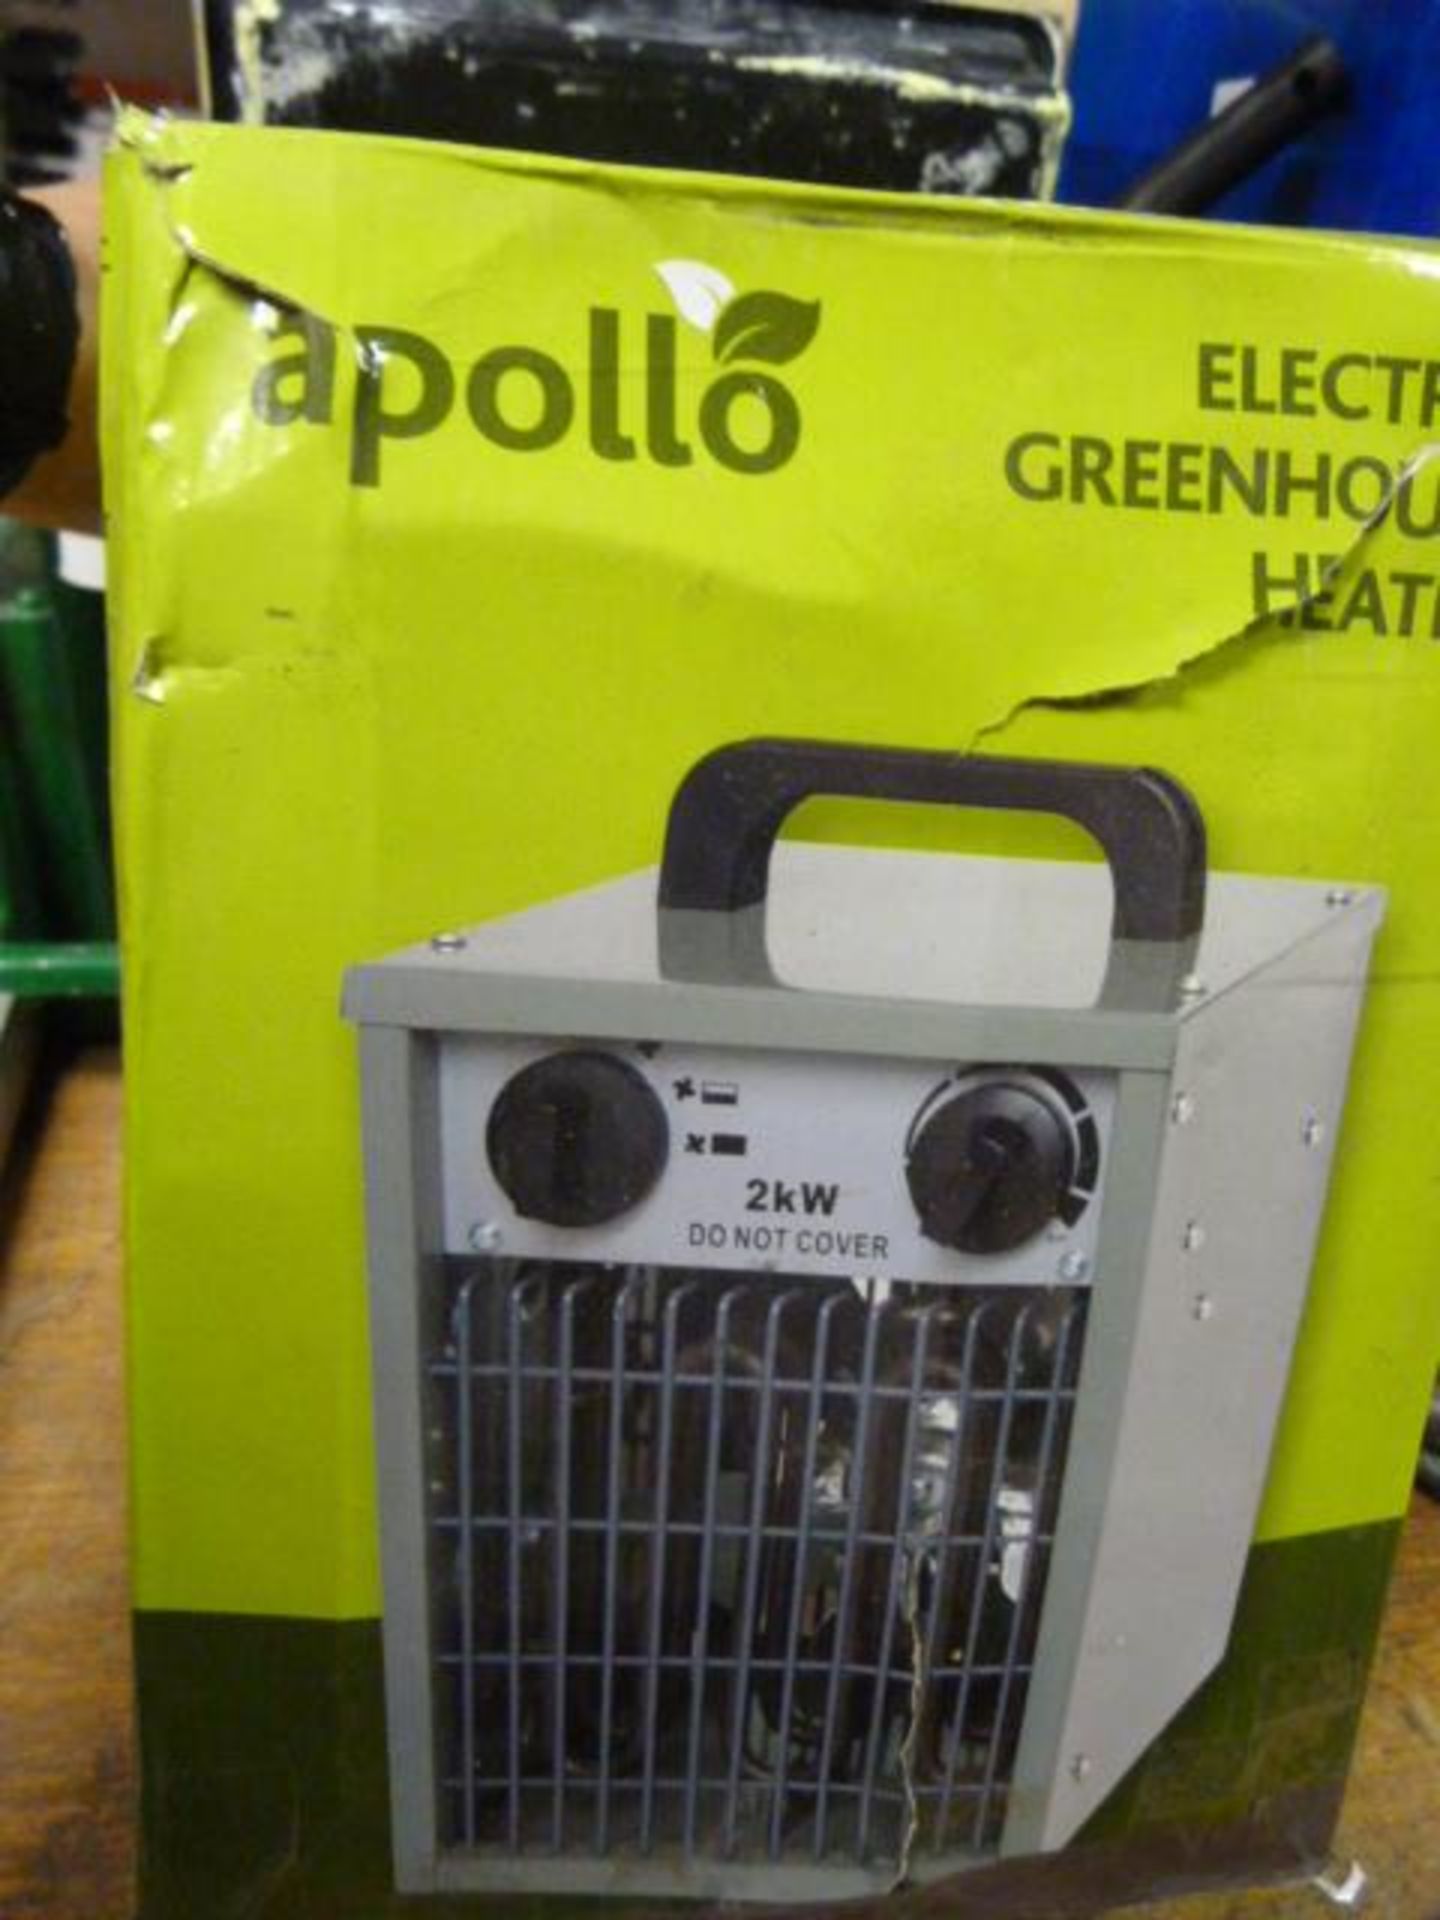 *Apollo Greenhouse Heater